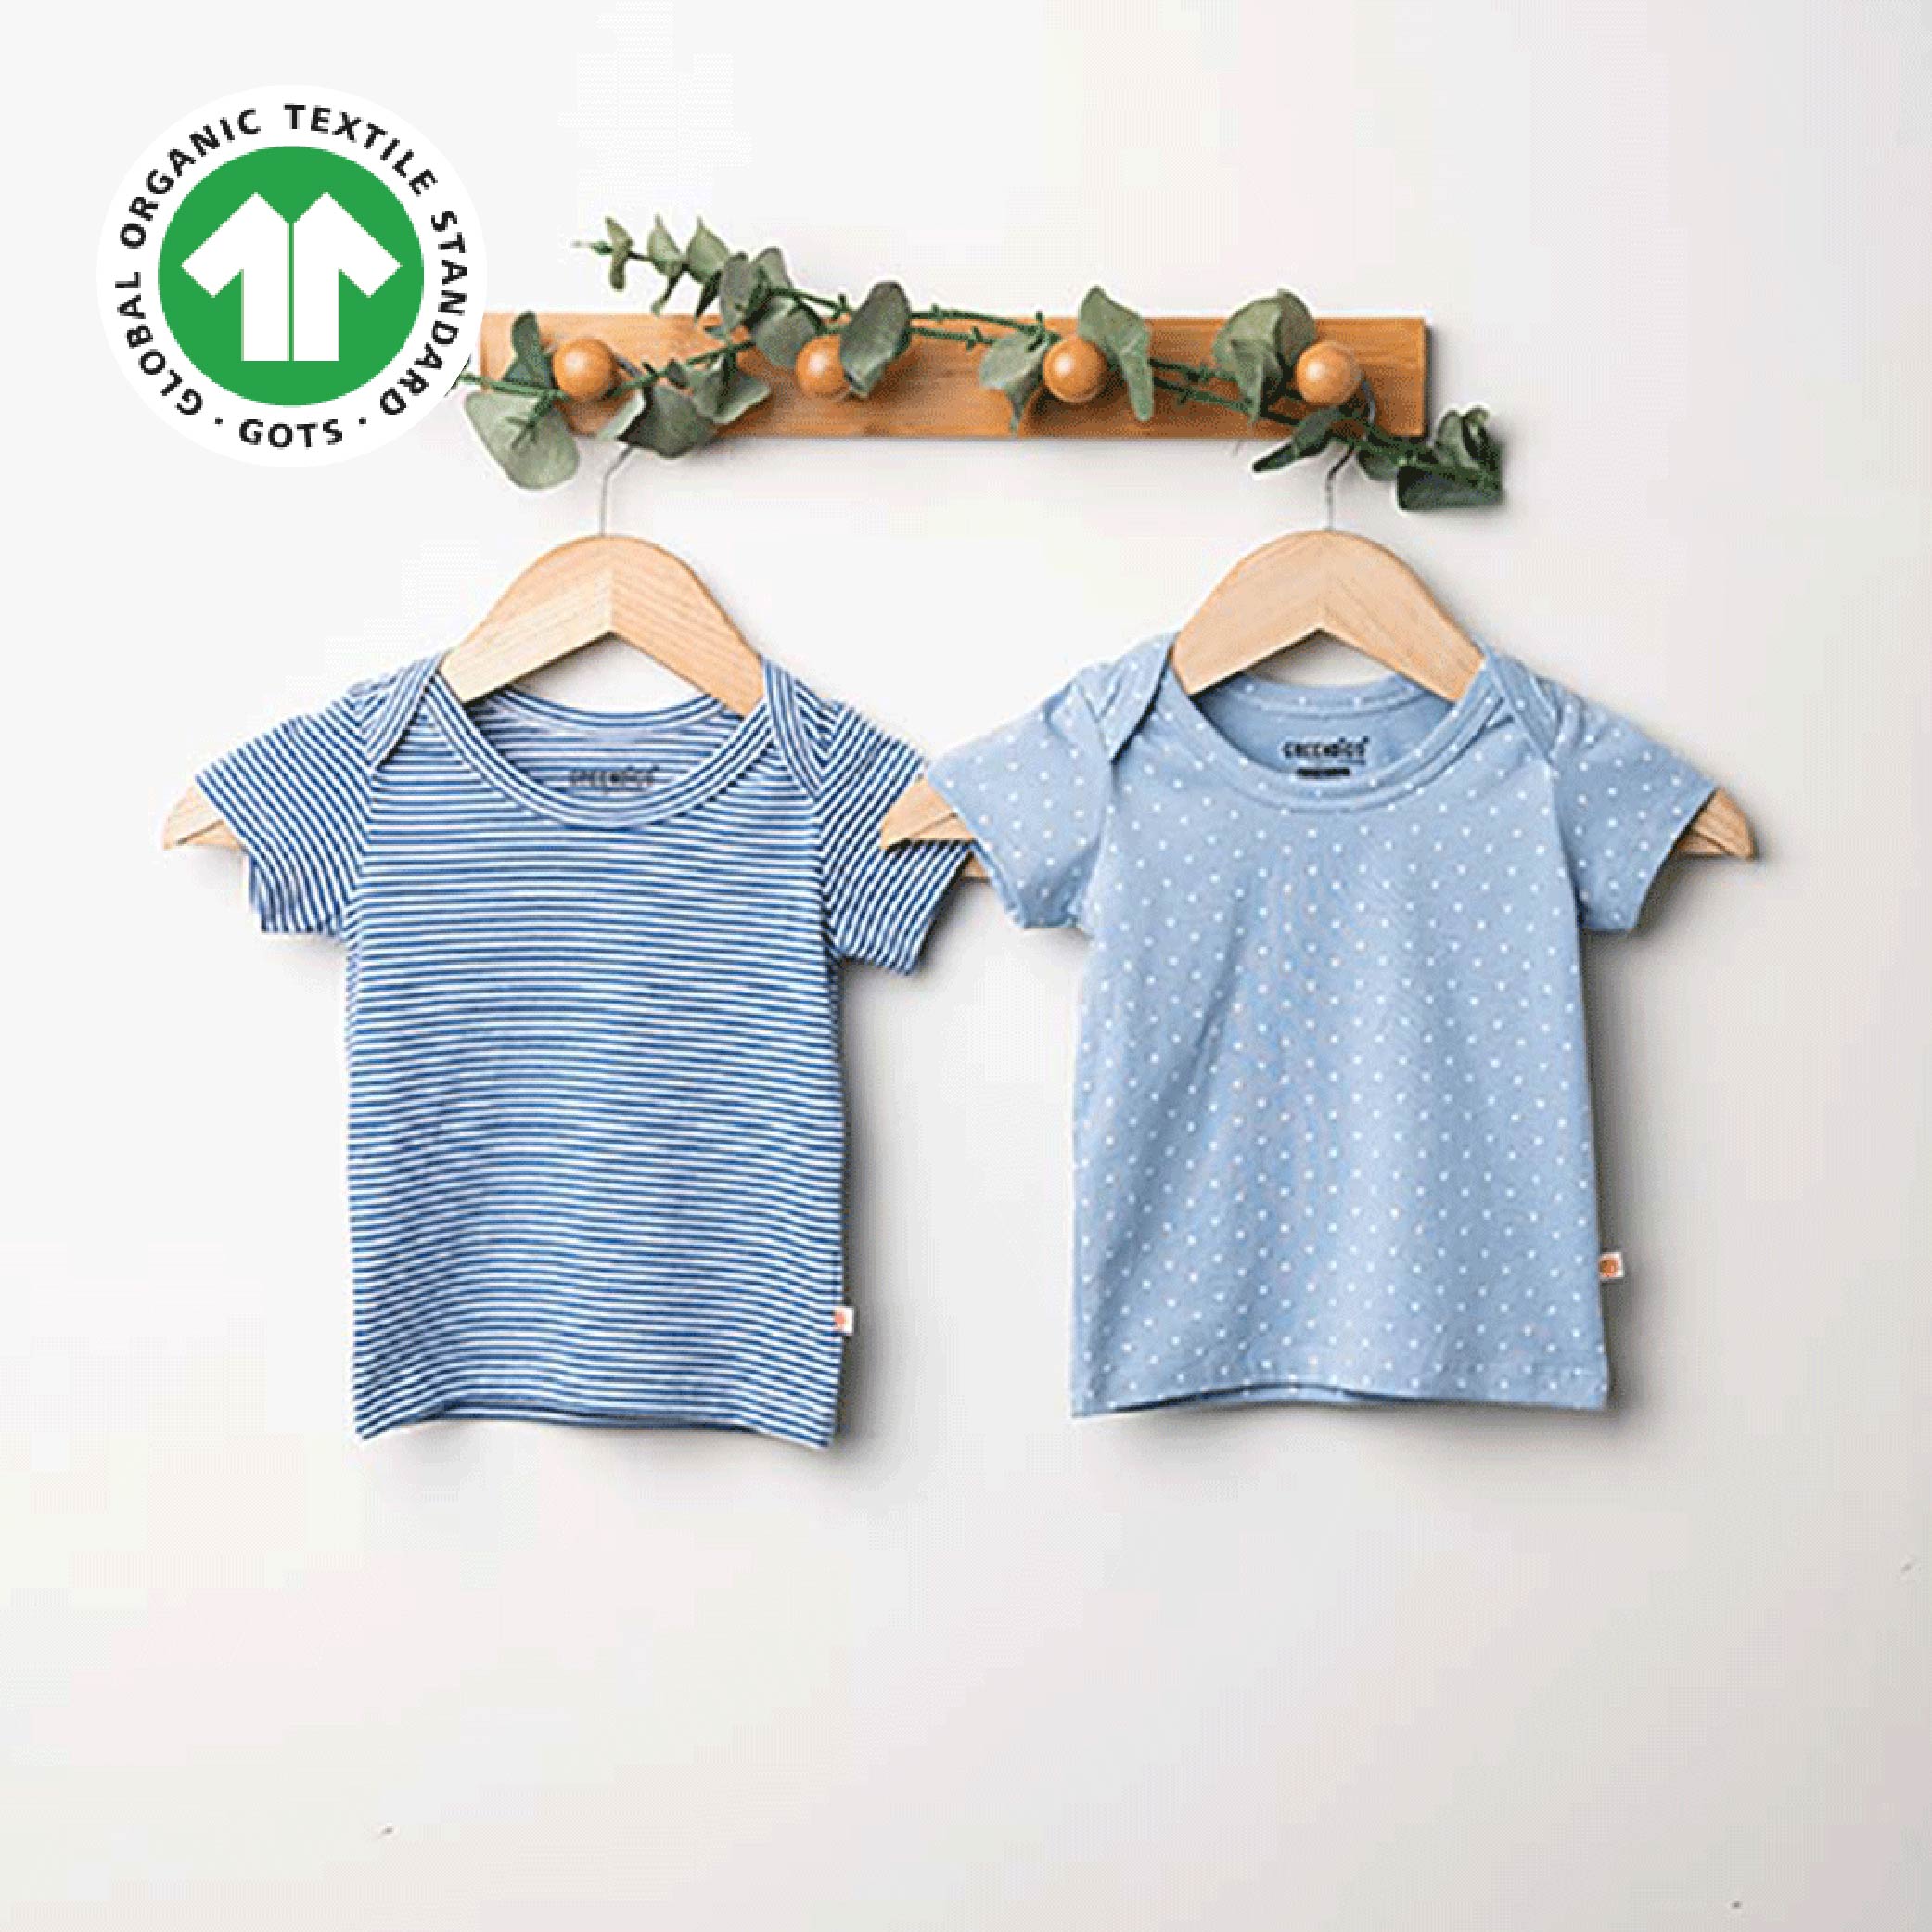 Greendigo 100% Organic Cotton Blue Printed Tshirt/Top For New Born Baby Boys And Baby Girls - Pack Of 2